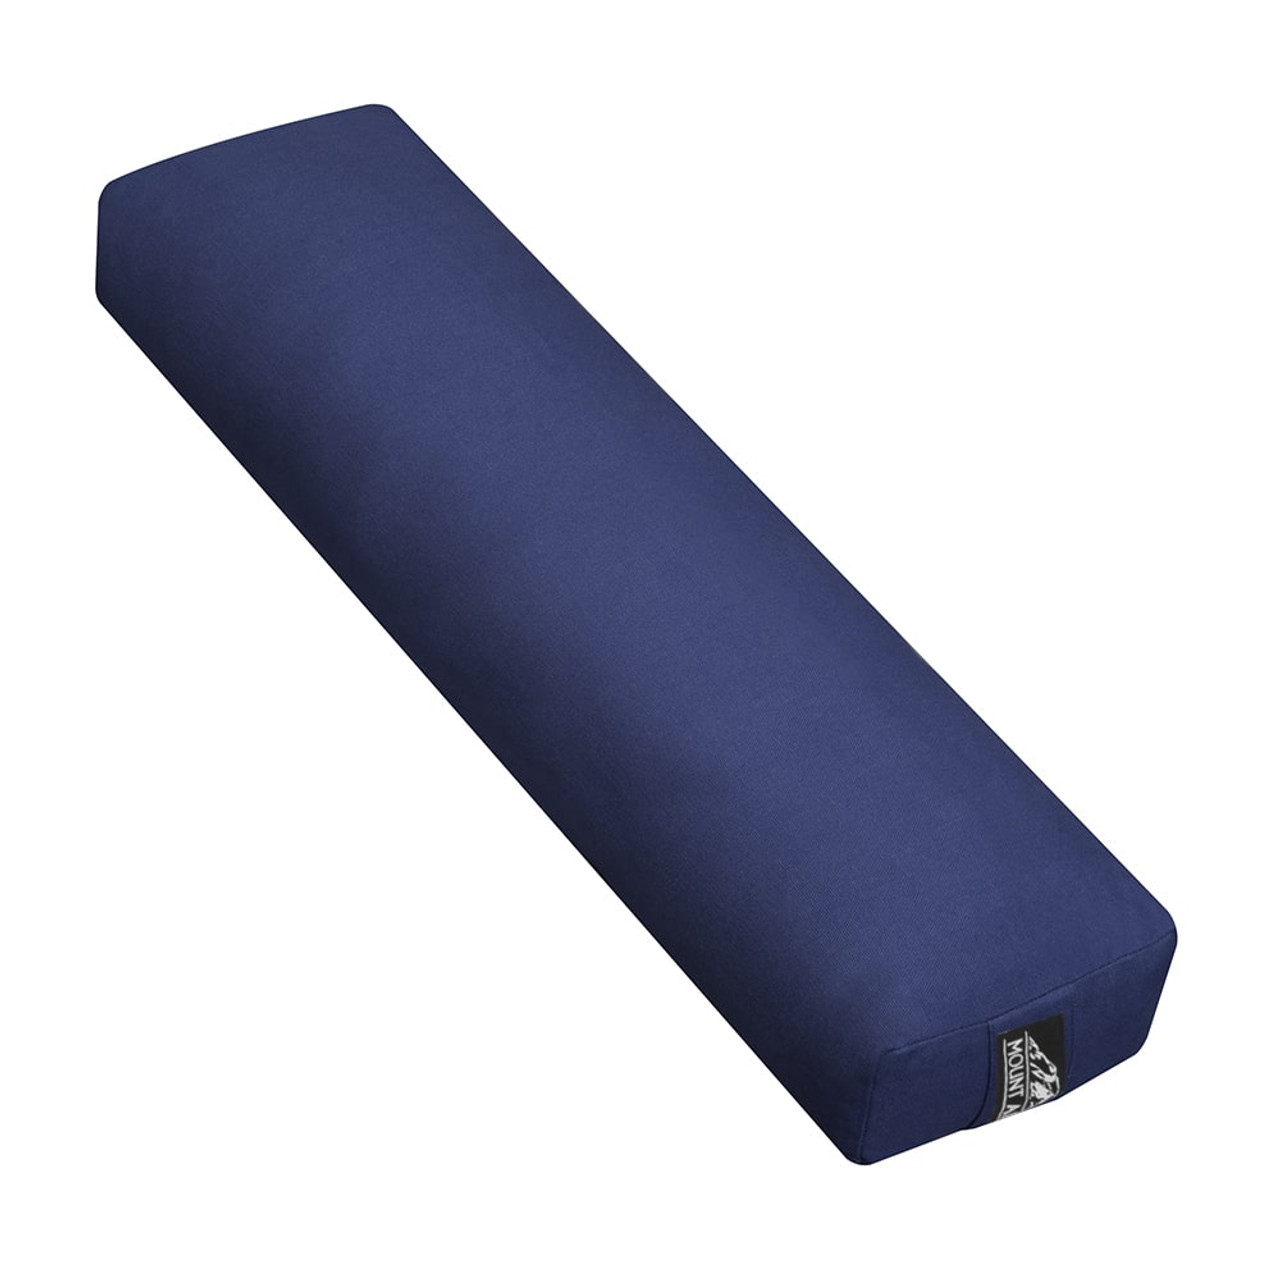 Mount Adams® Pranayama Rectangular Yoga Bolster (25L x 3H x 6W)